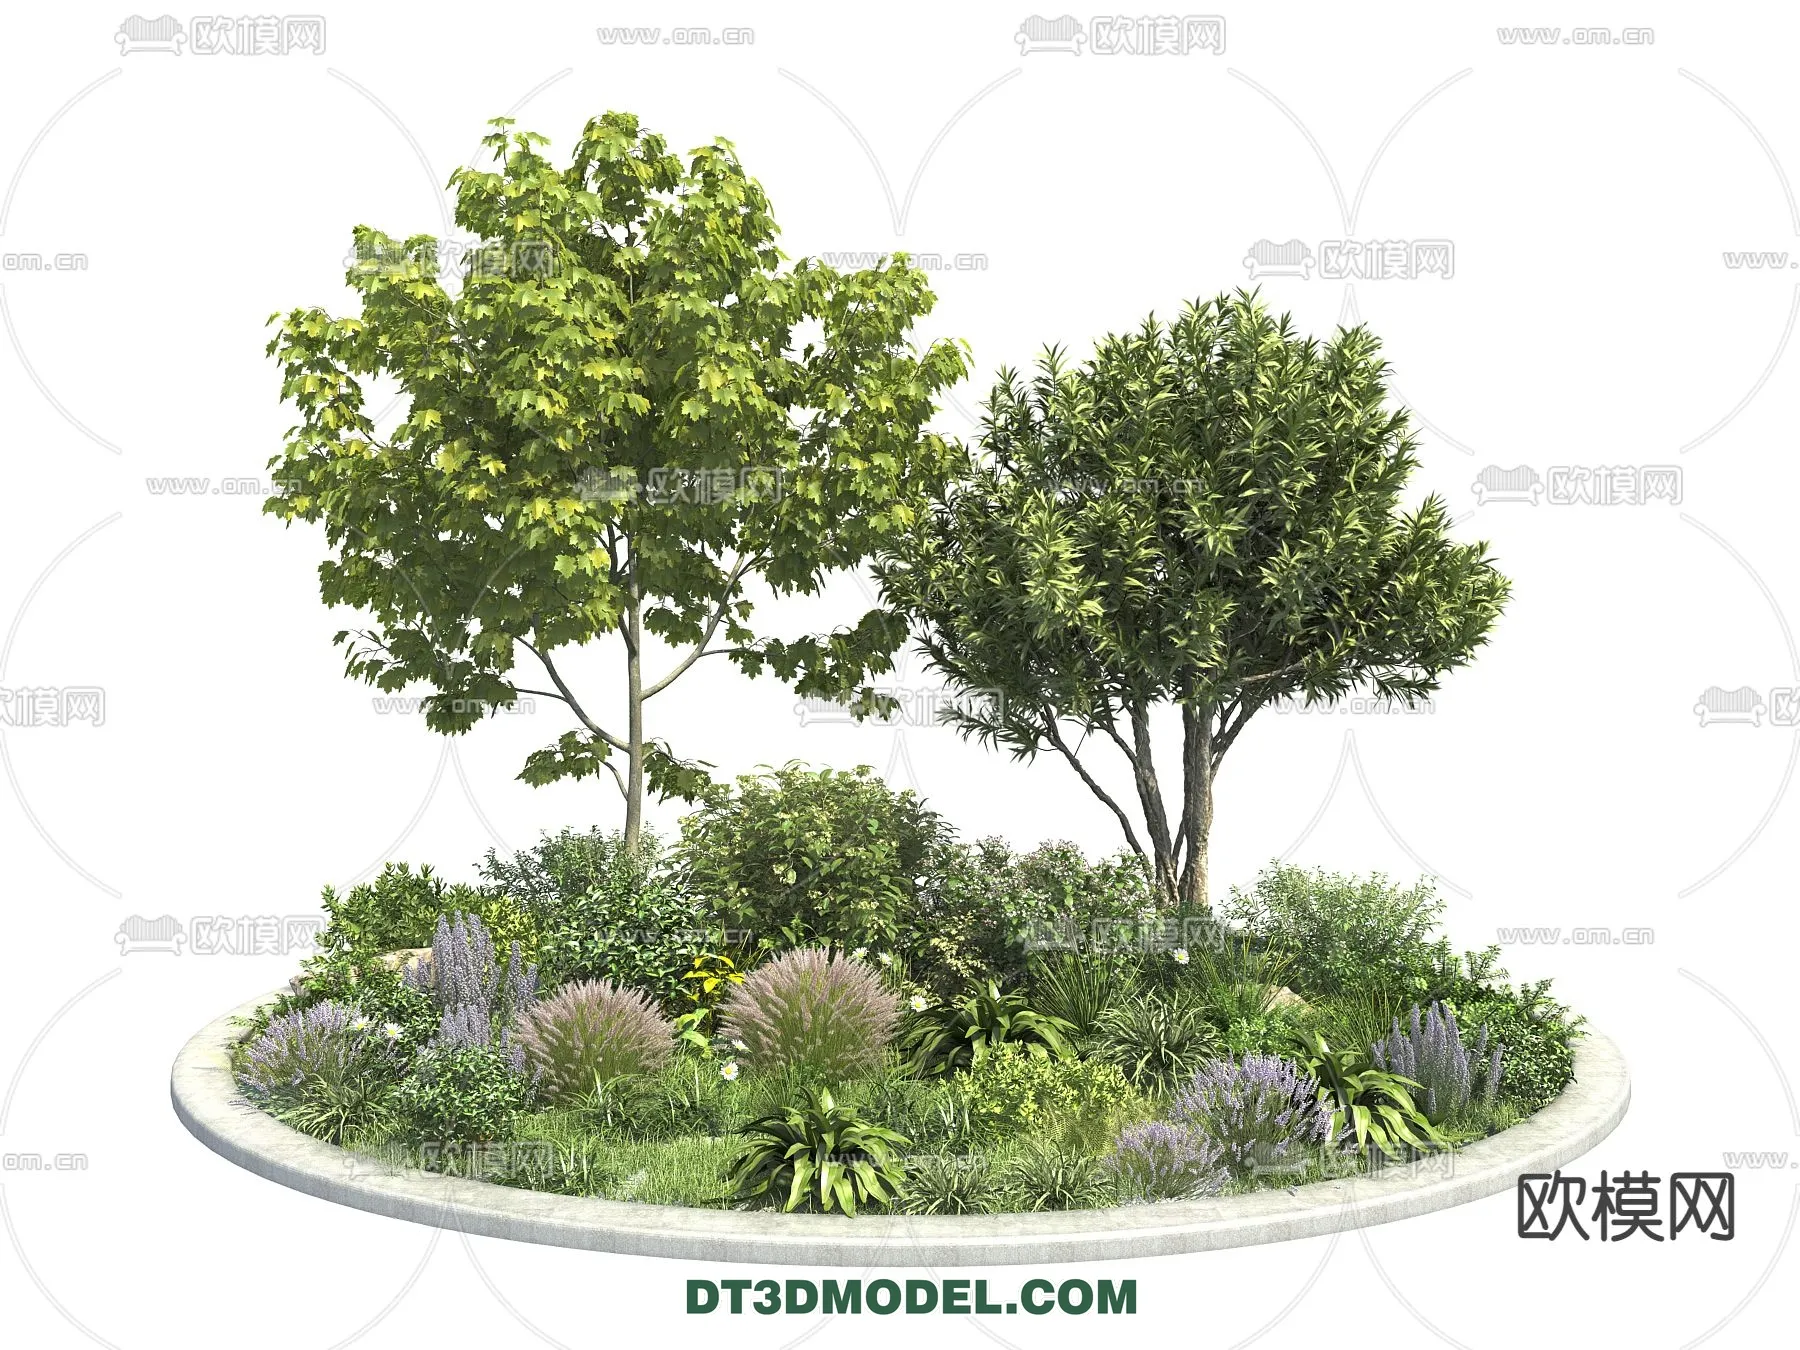 PLANTS – BUSH – VRAY / CORONA – 3D MODEL – 282